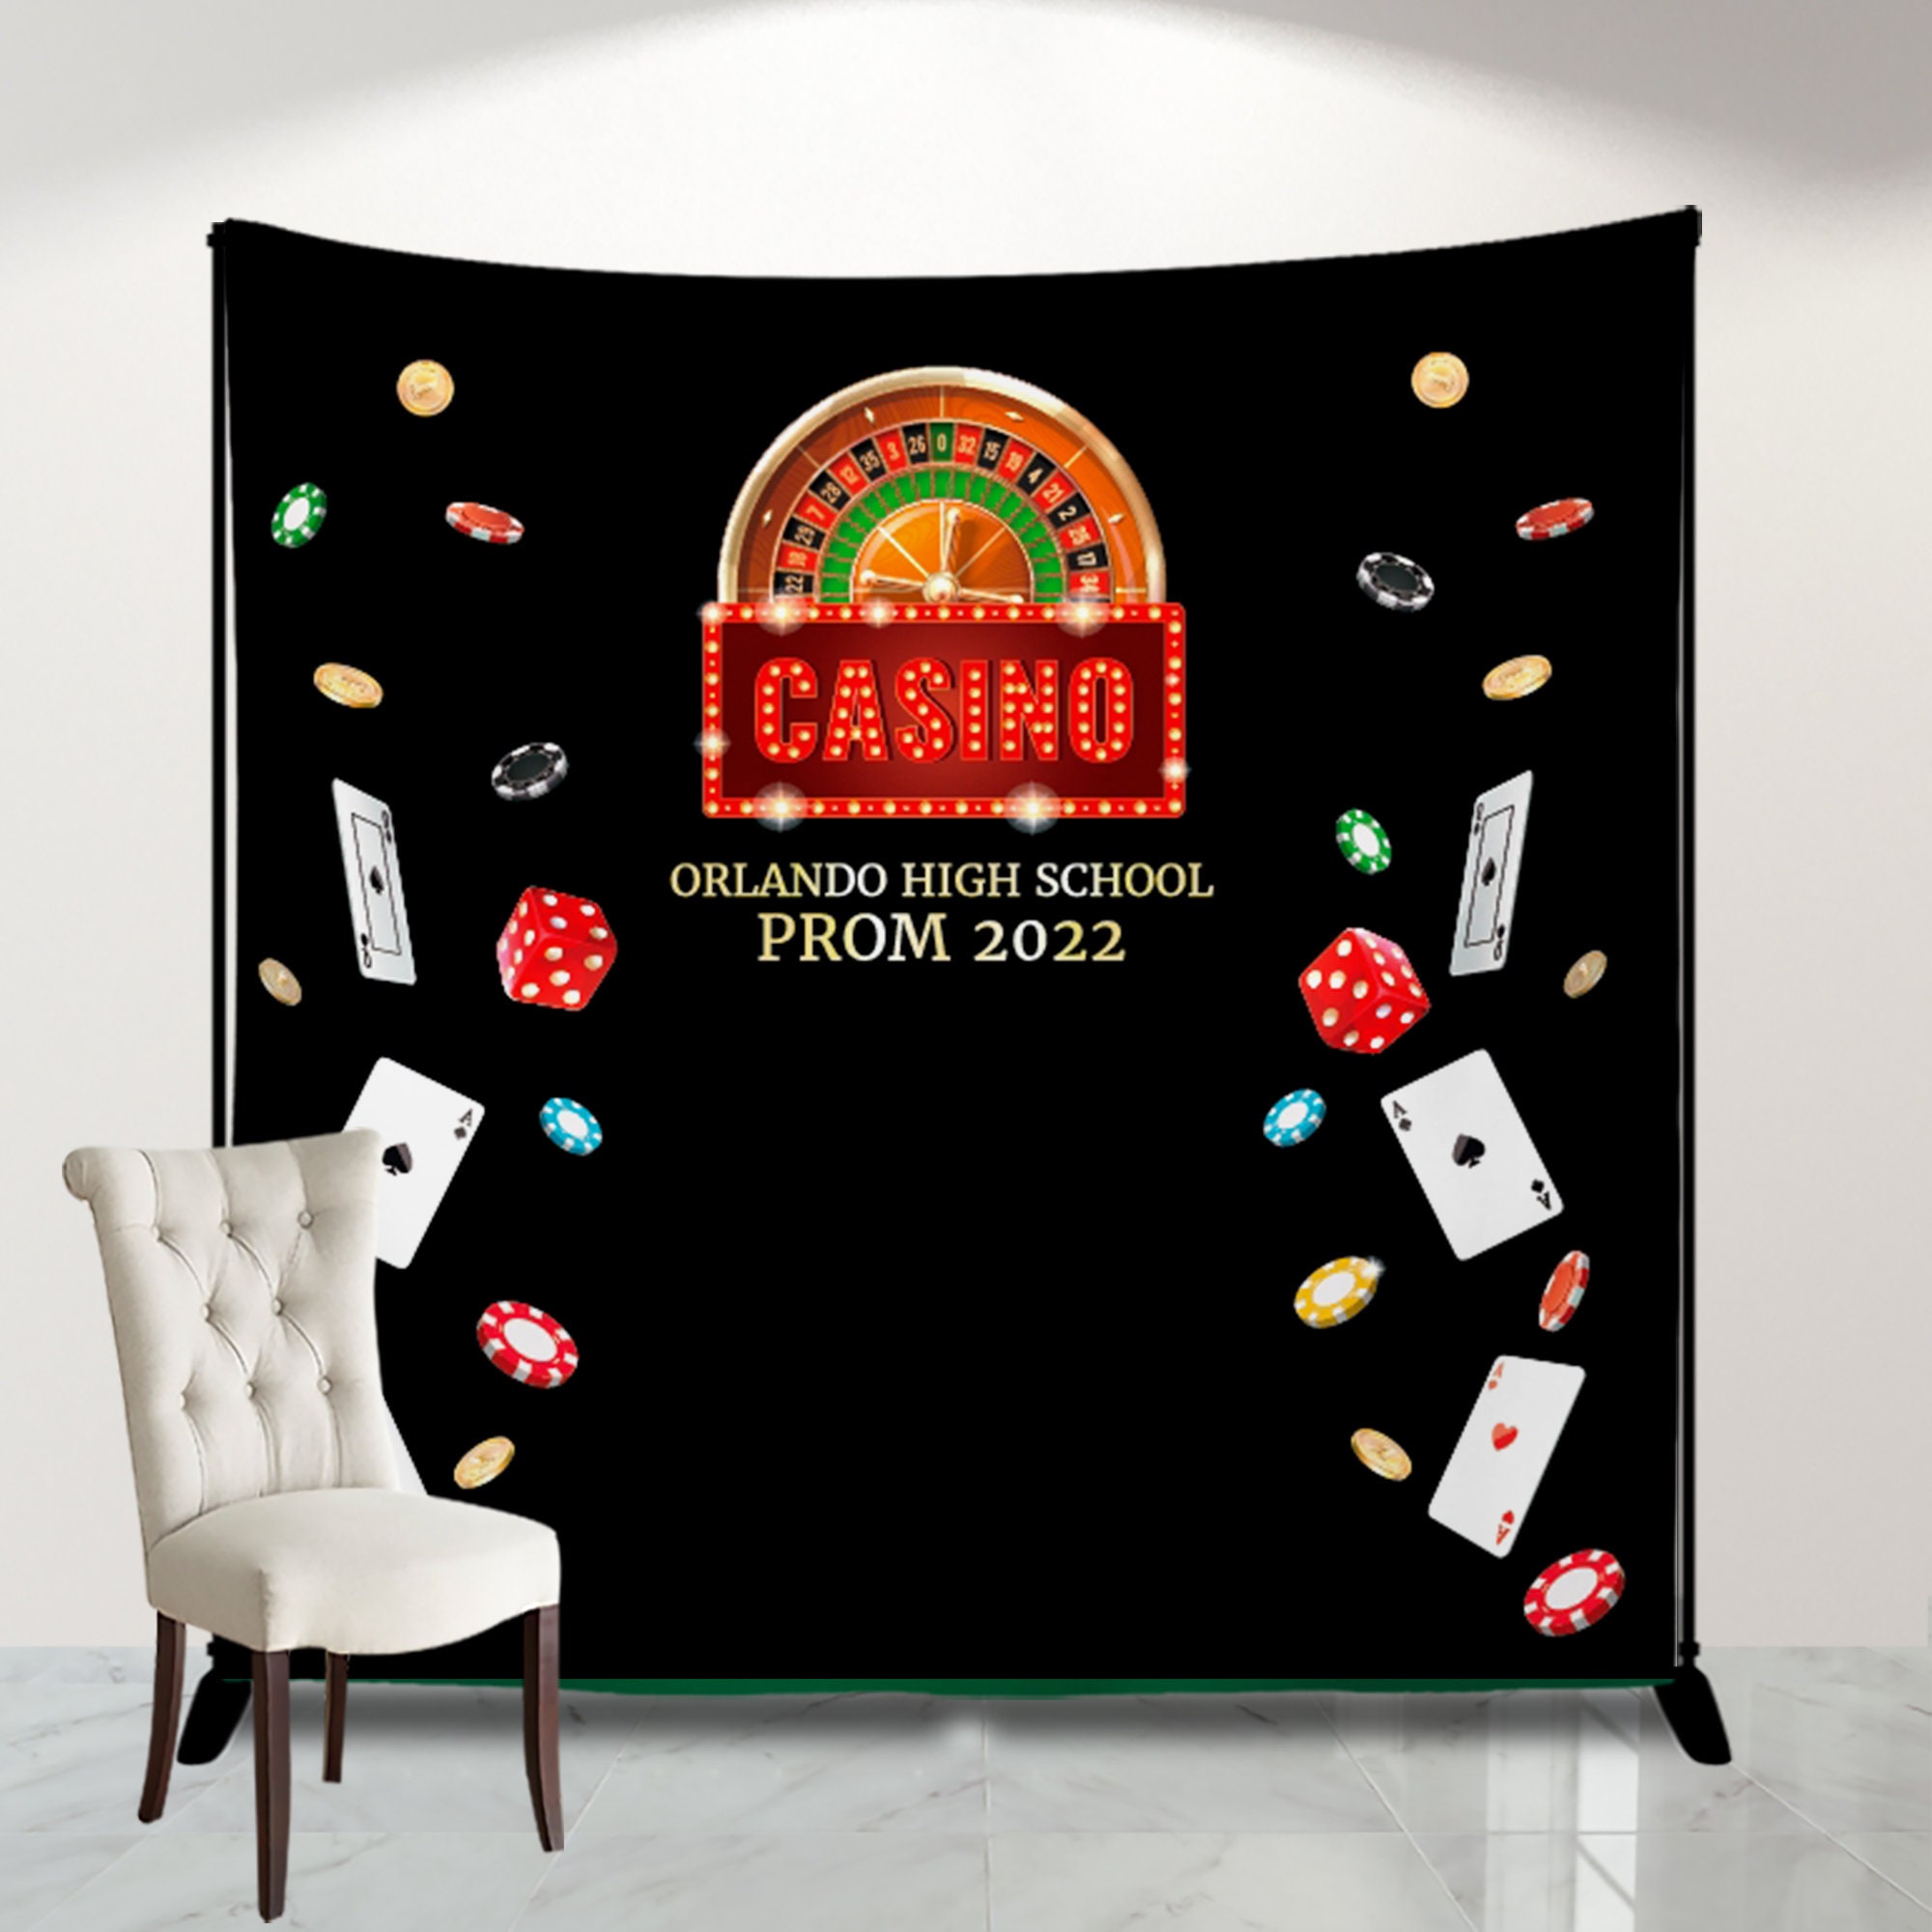 Casino Backdrop Personalized, Casino Theme Party Decorations